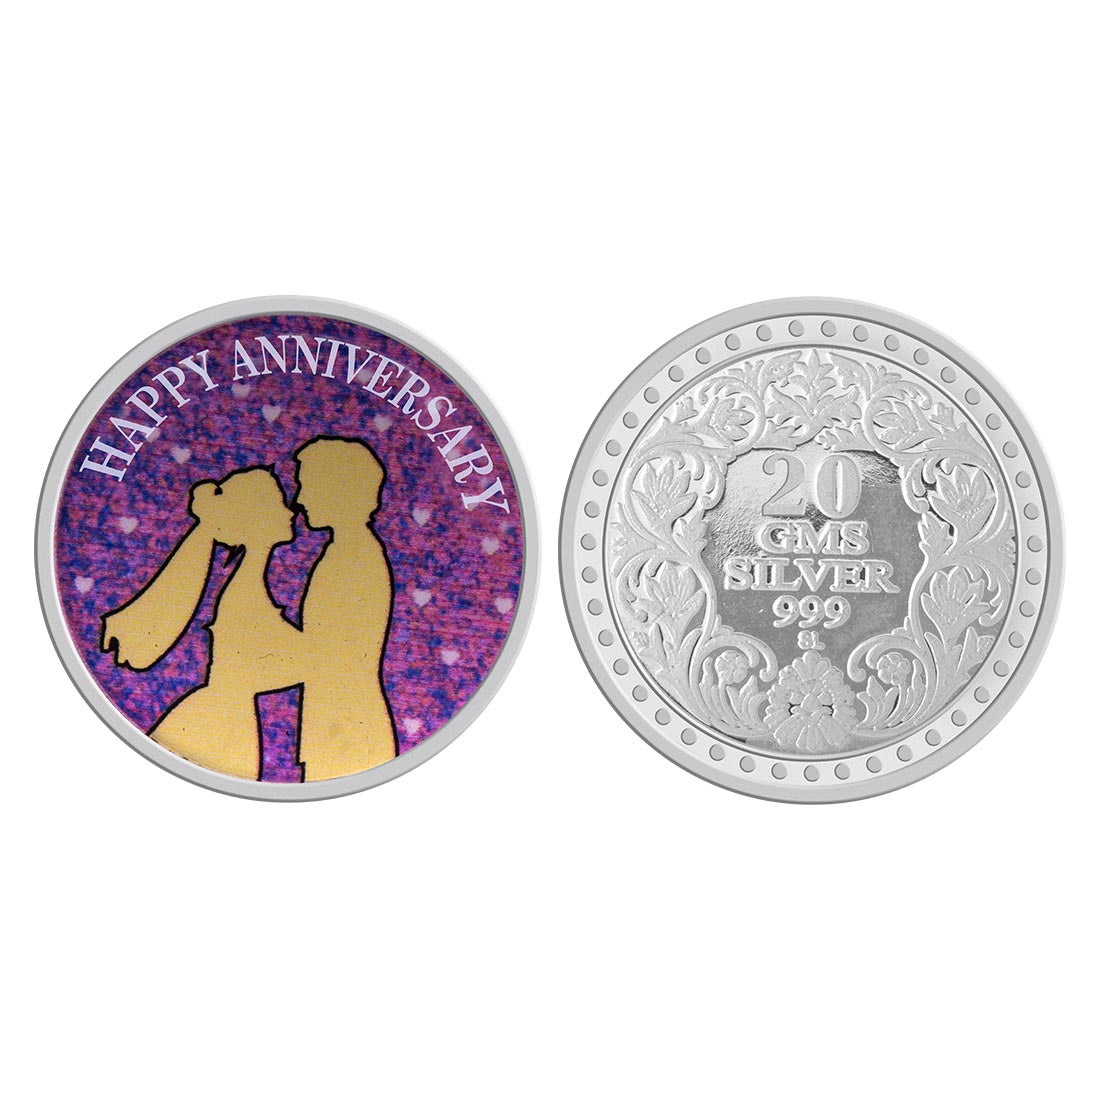 Happy Anniversary 20gm Silver Coin